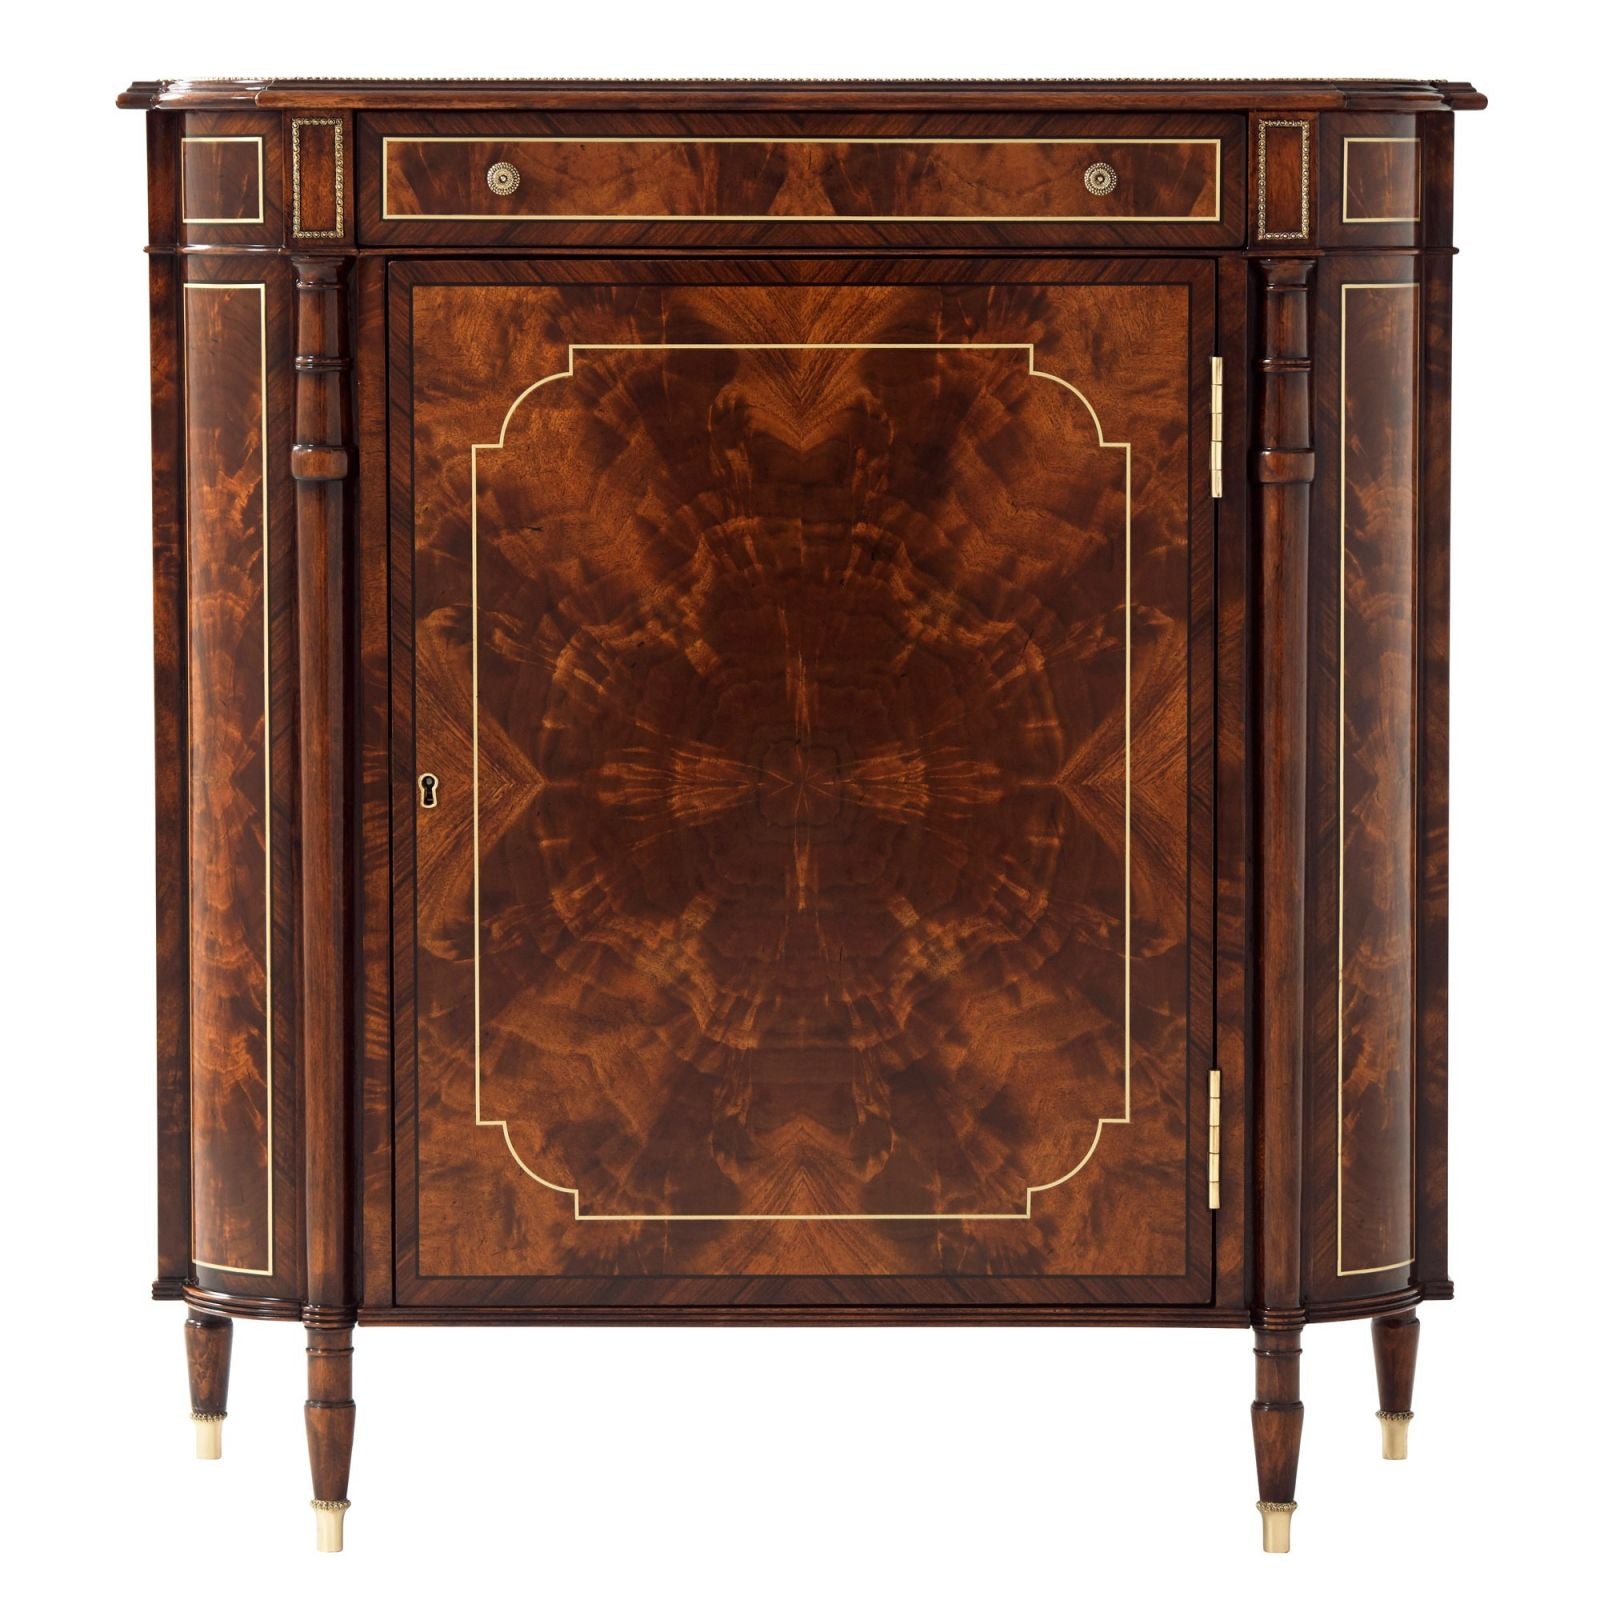 Flame mahogany side cabinet